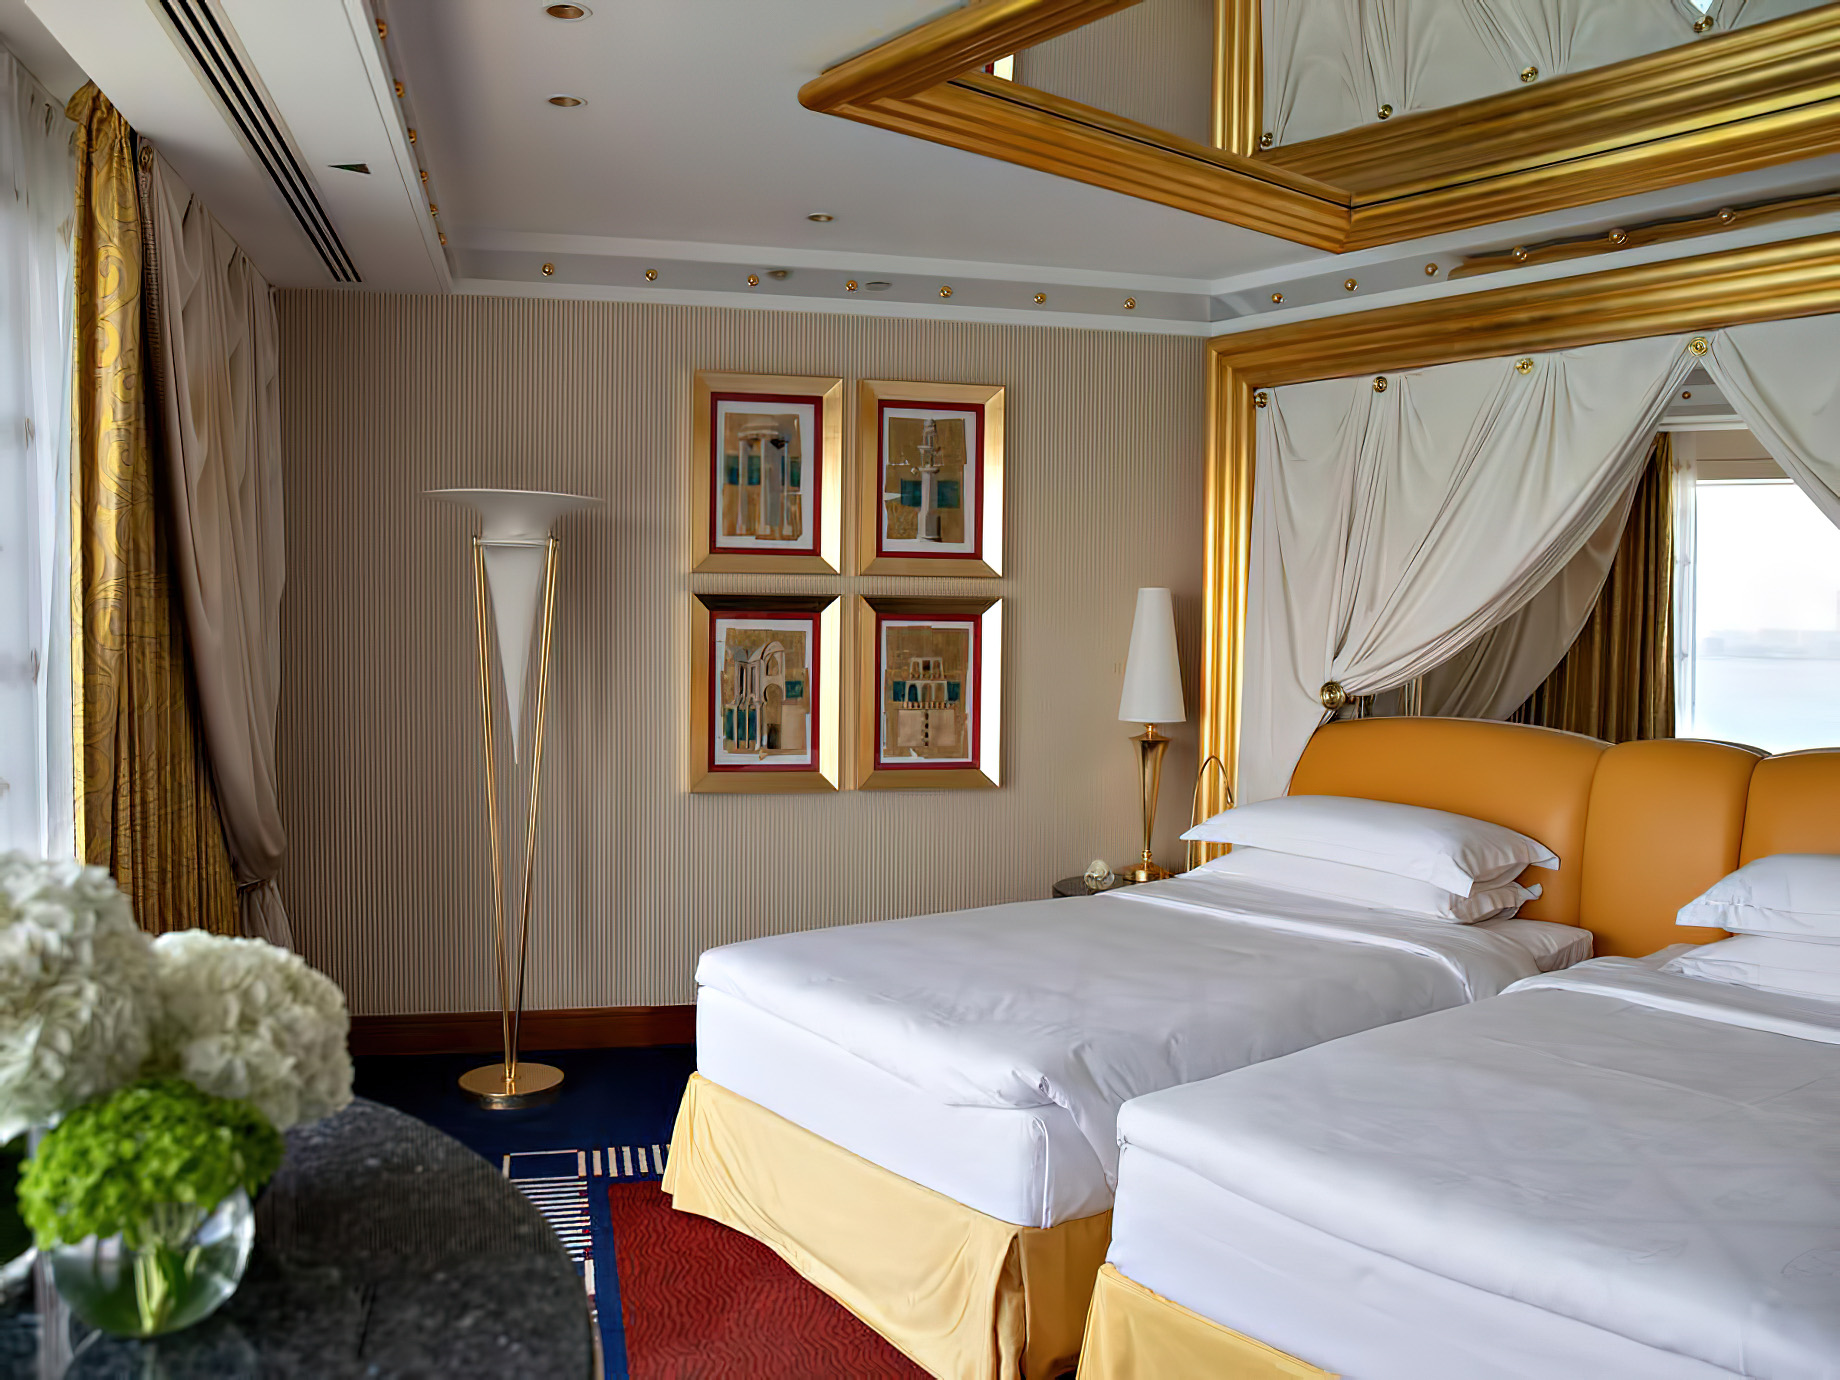 Burj Al Arab Jumeirah Hotel – Dubai, UAE – Suite Bedroom